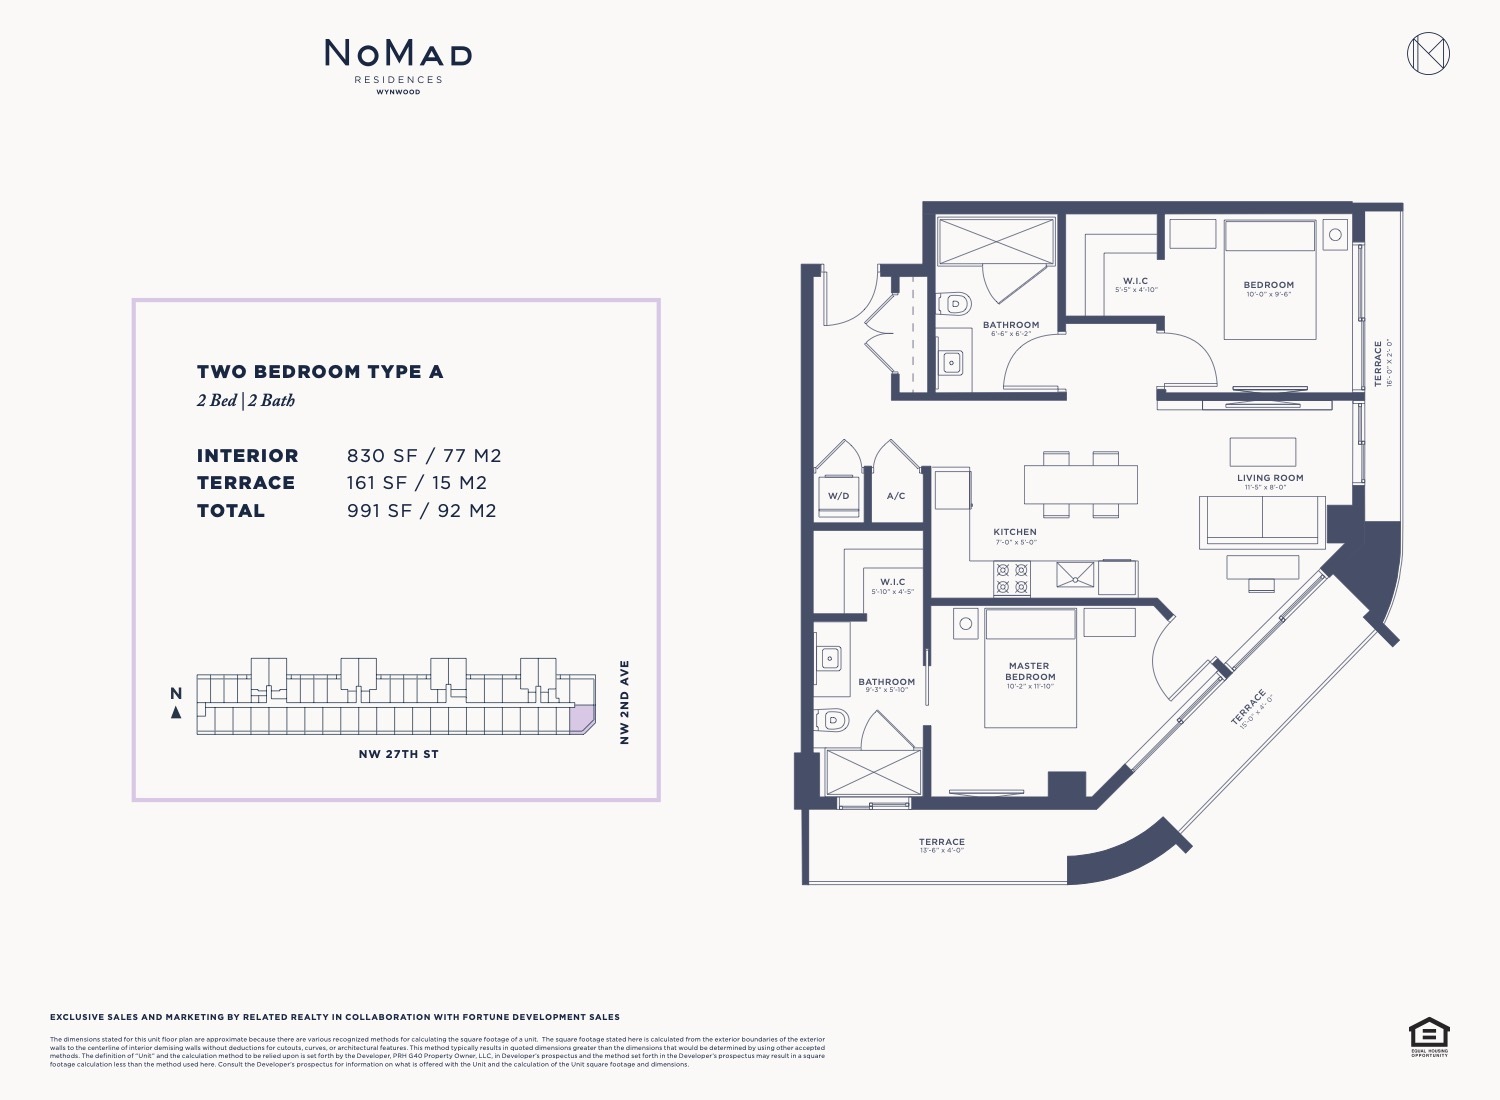 Floor Plan for Nomad Wynwood Floorplans, Two Bedroom Type A